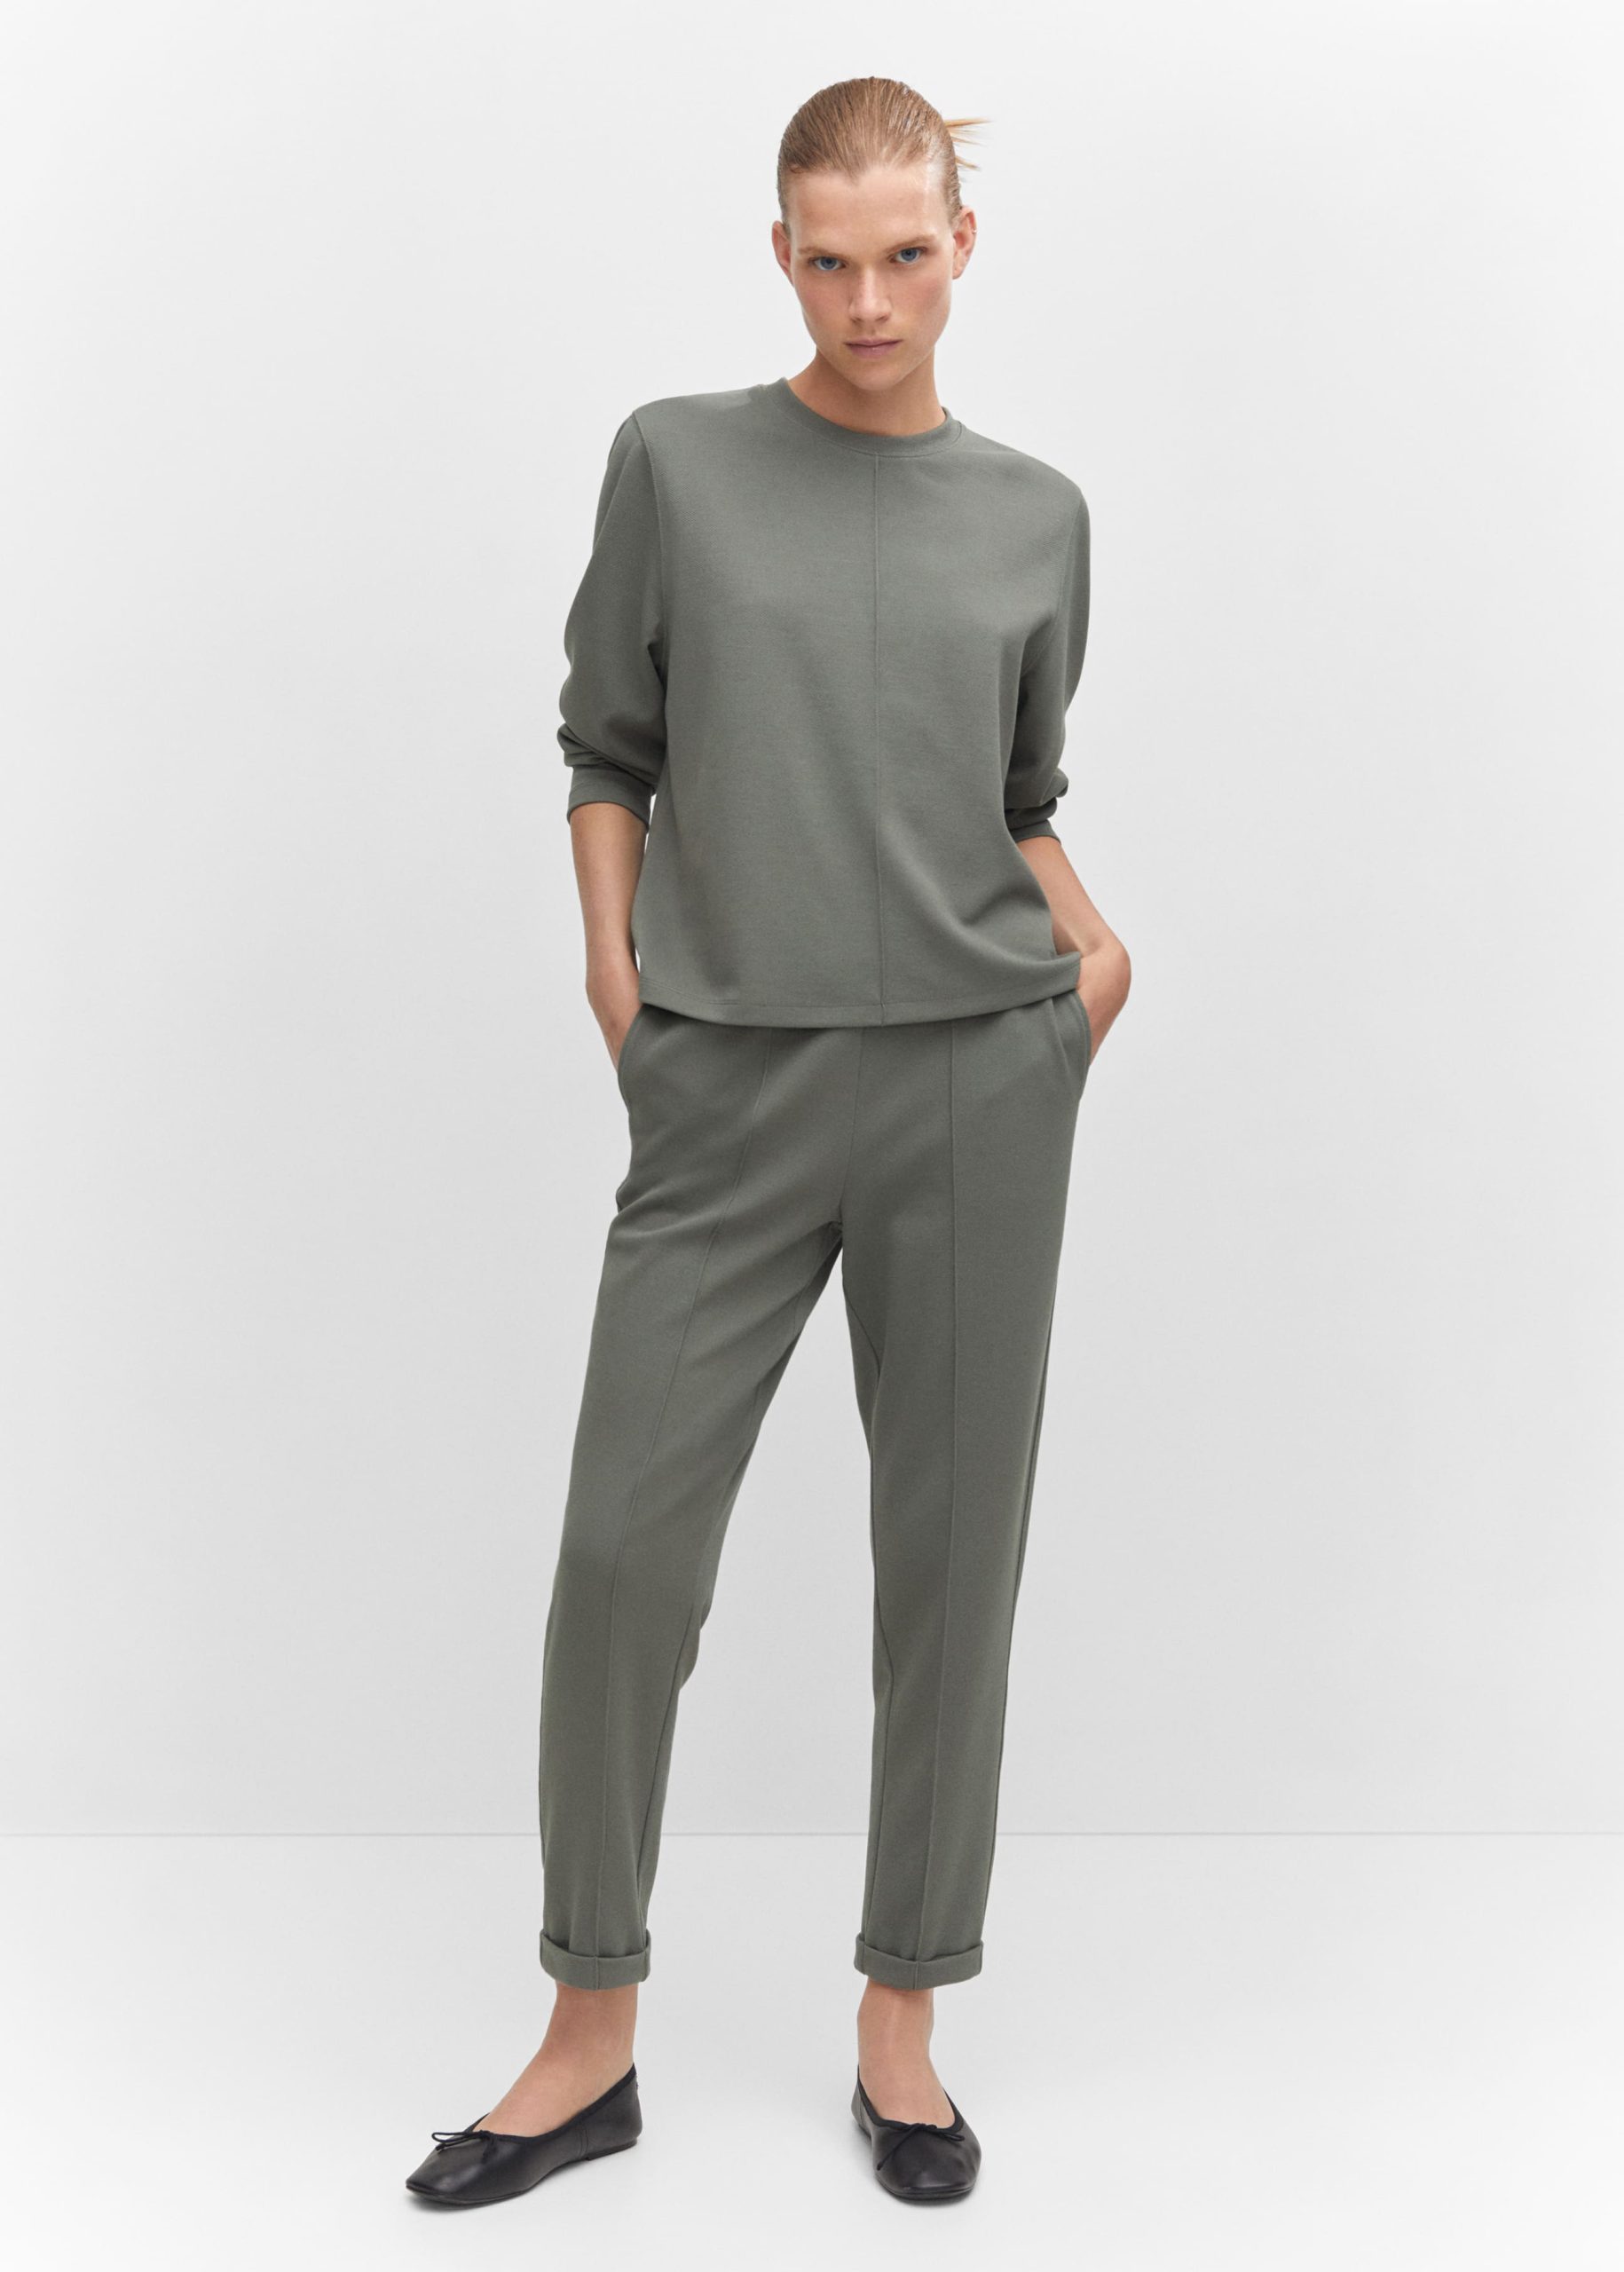 grey pants outfit women